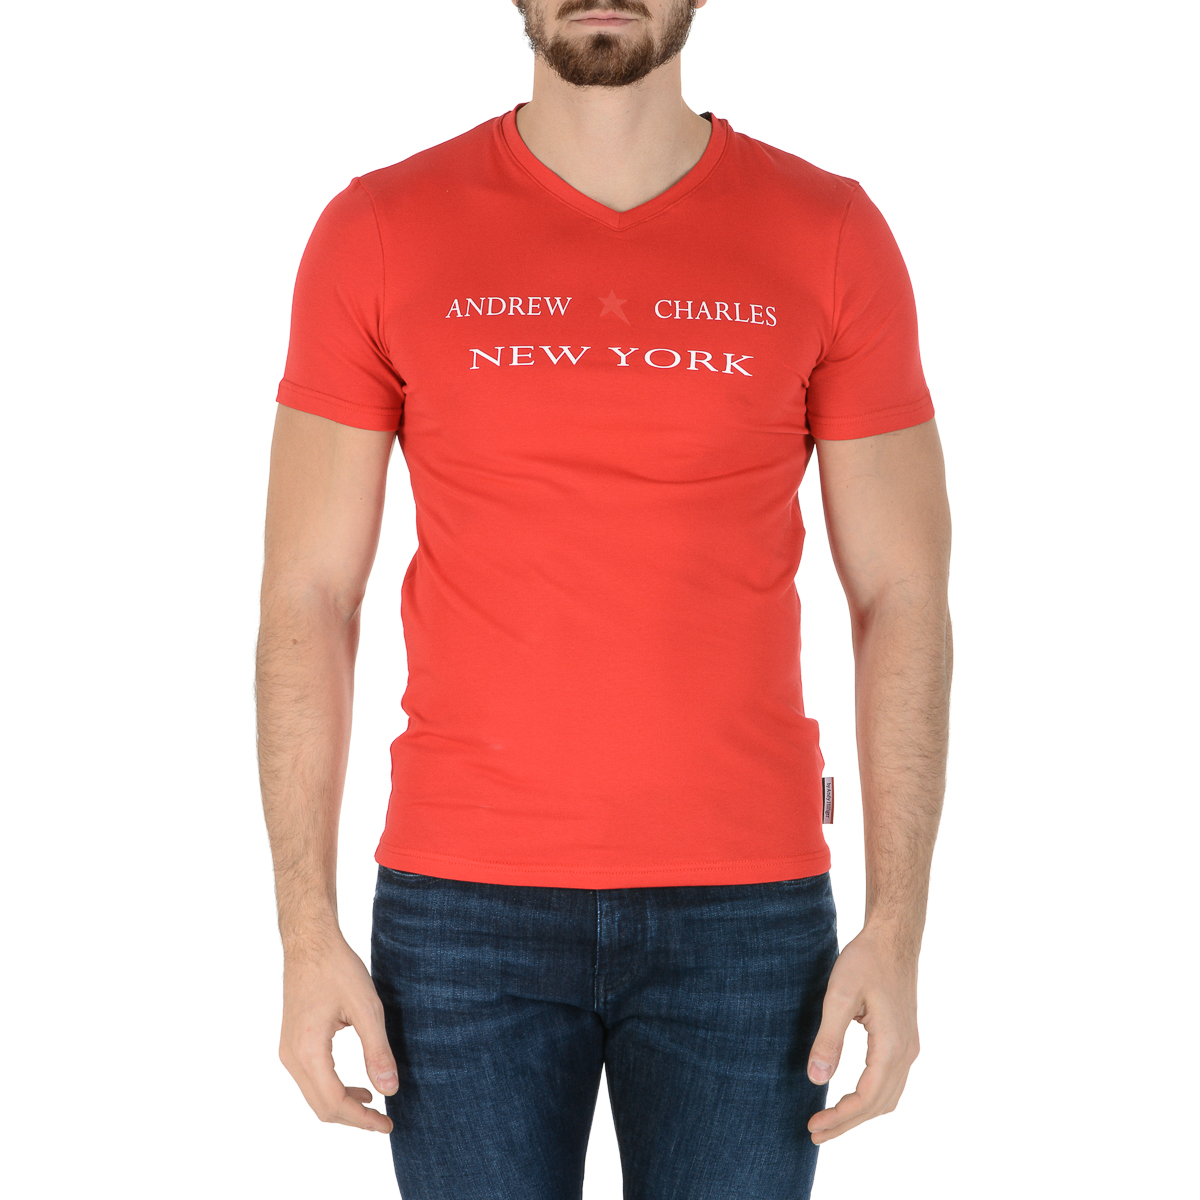 Andrew Charles Mens T-Shirt Short Sleeves V-Neck Red KENAN